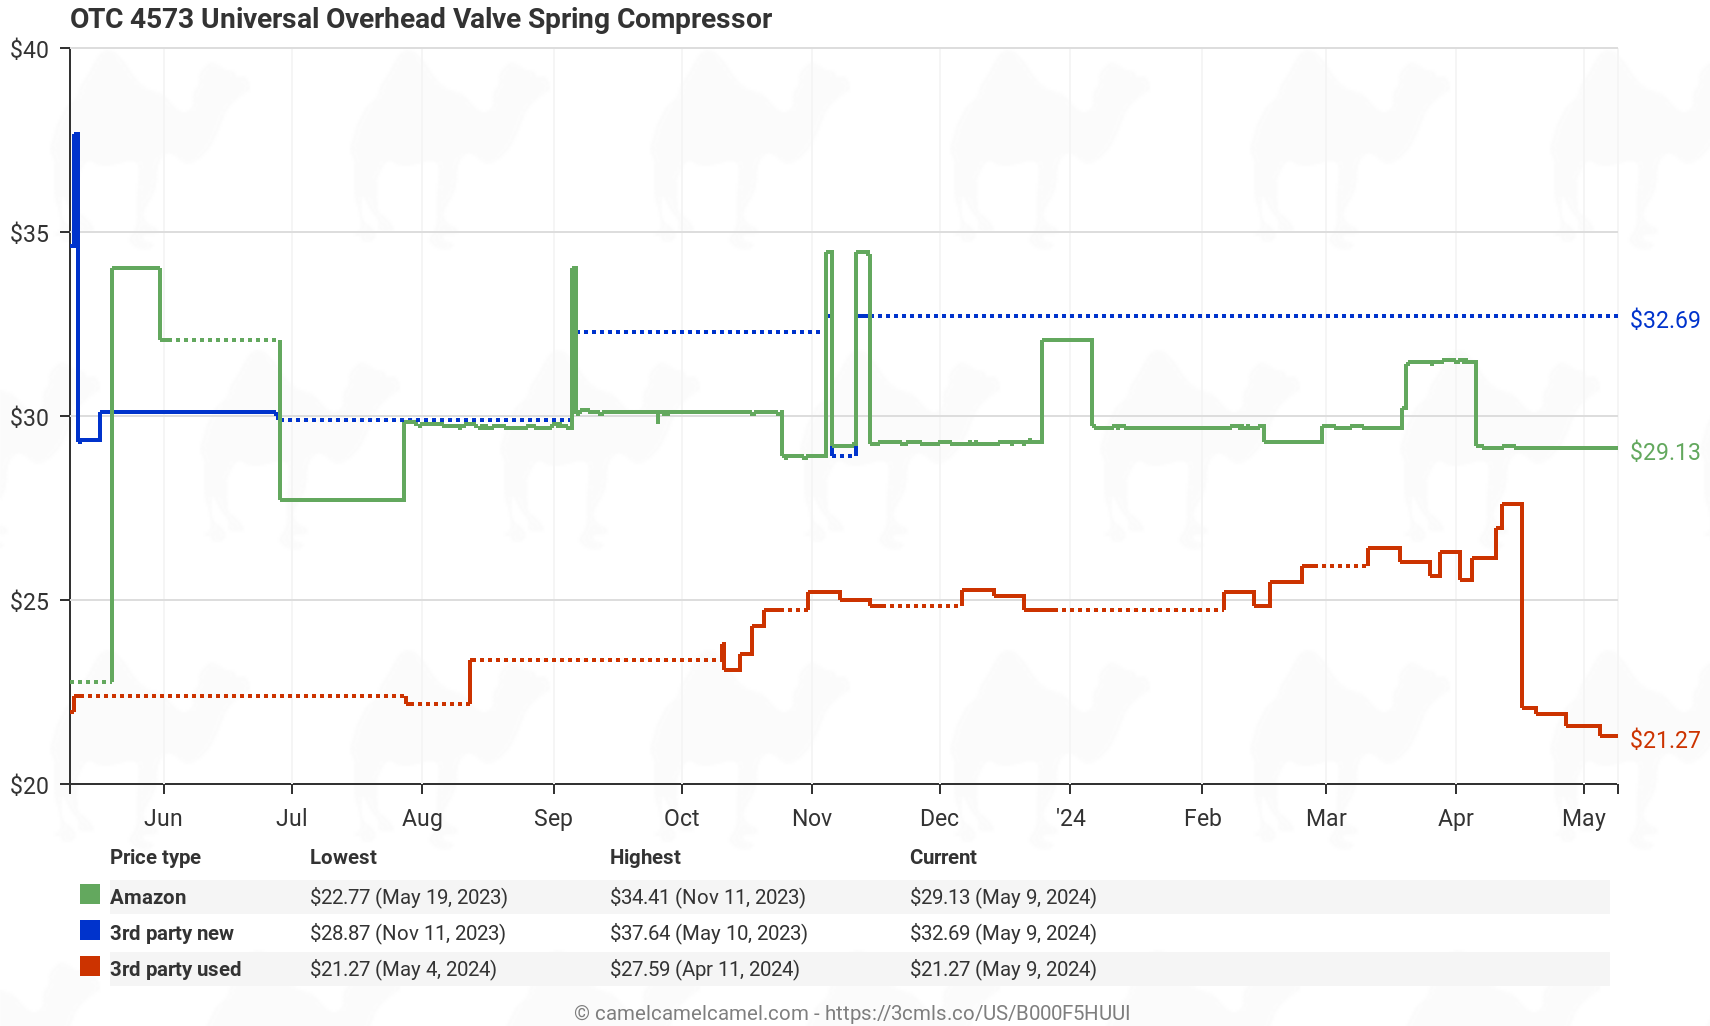 OTC 4573 Universal Overhead Valve Spring Compressor - Price History: B000F5HUUI